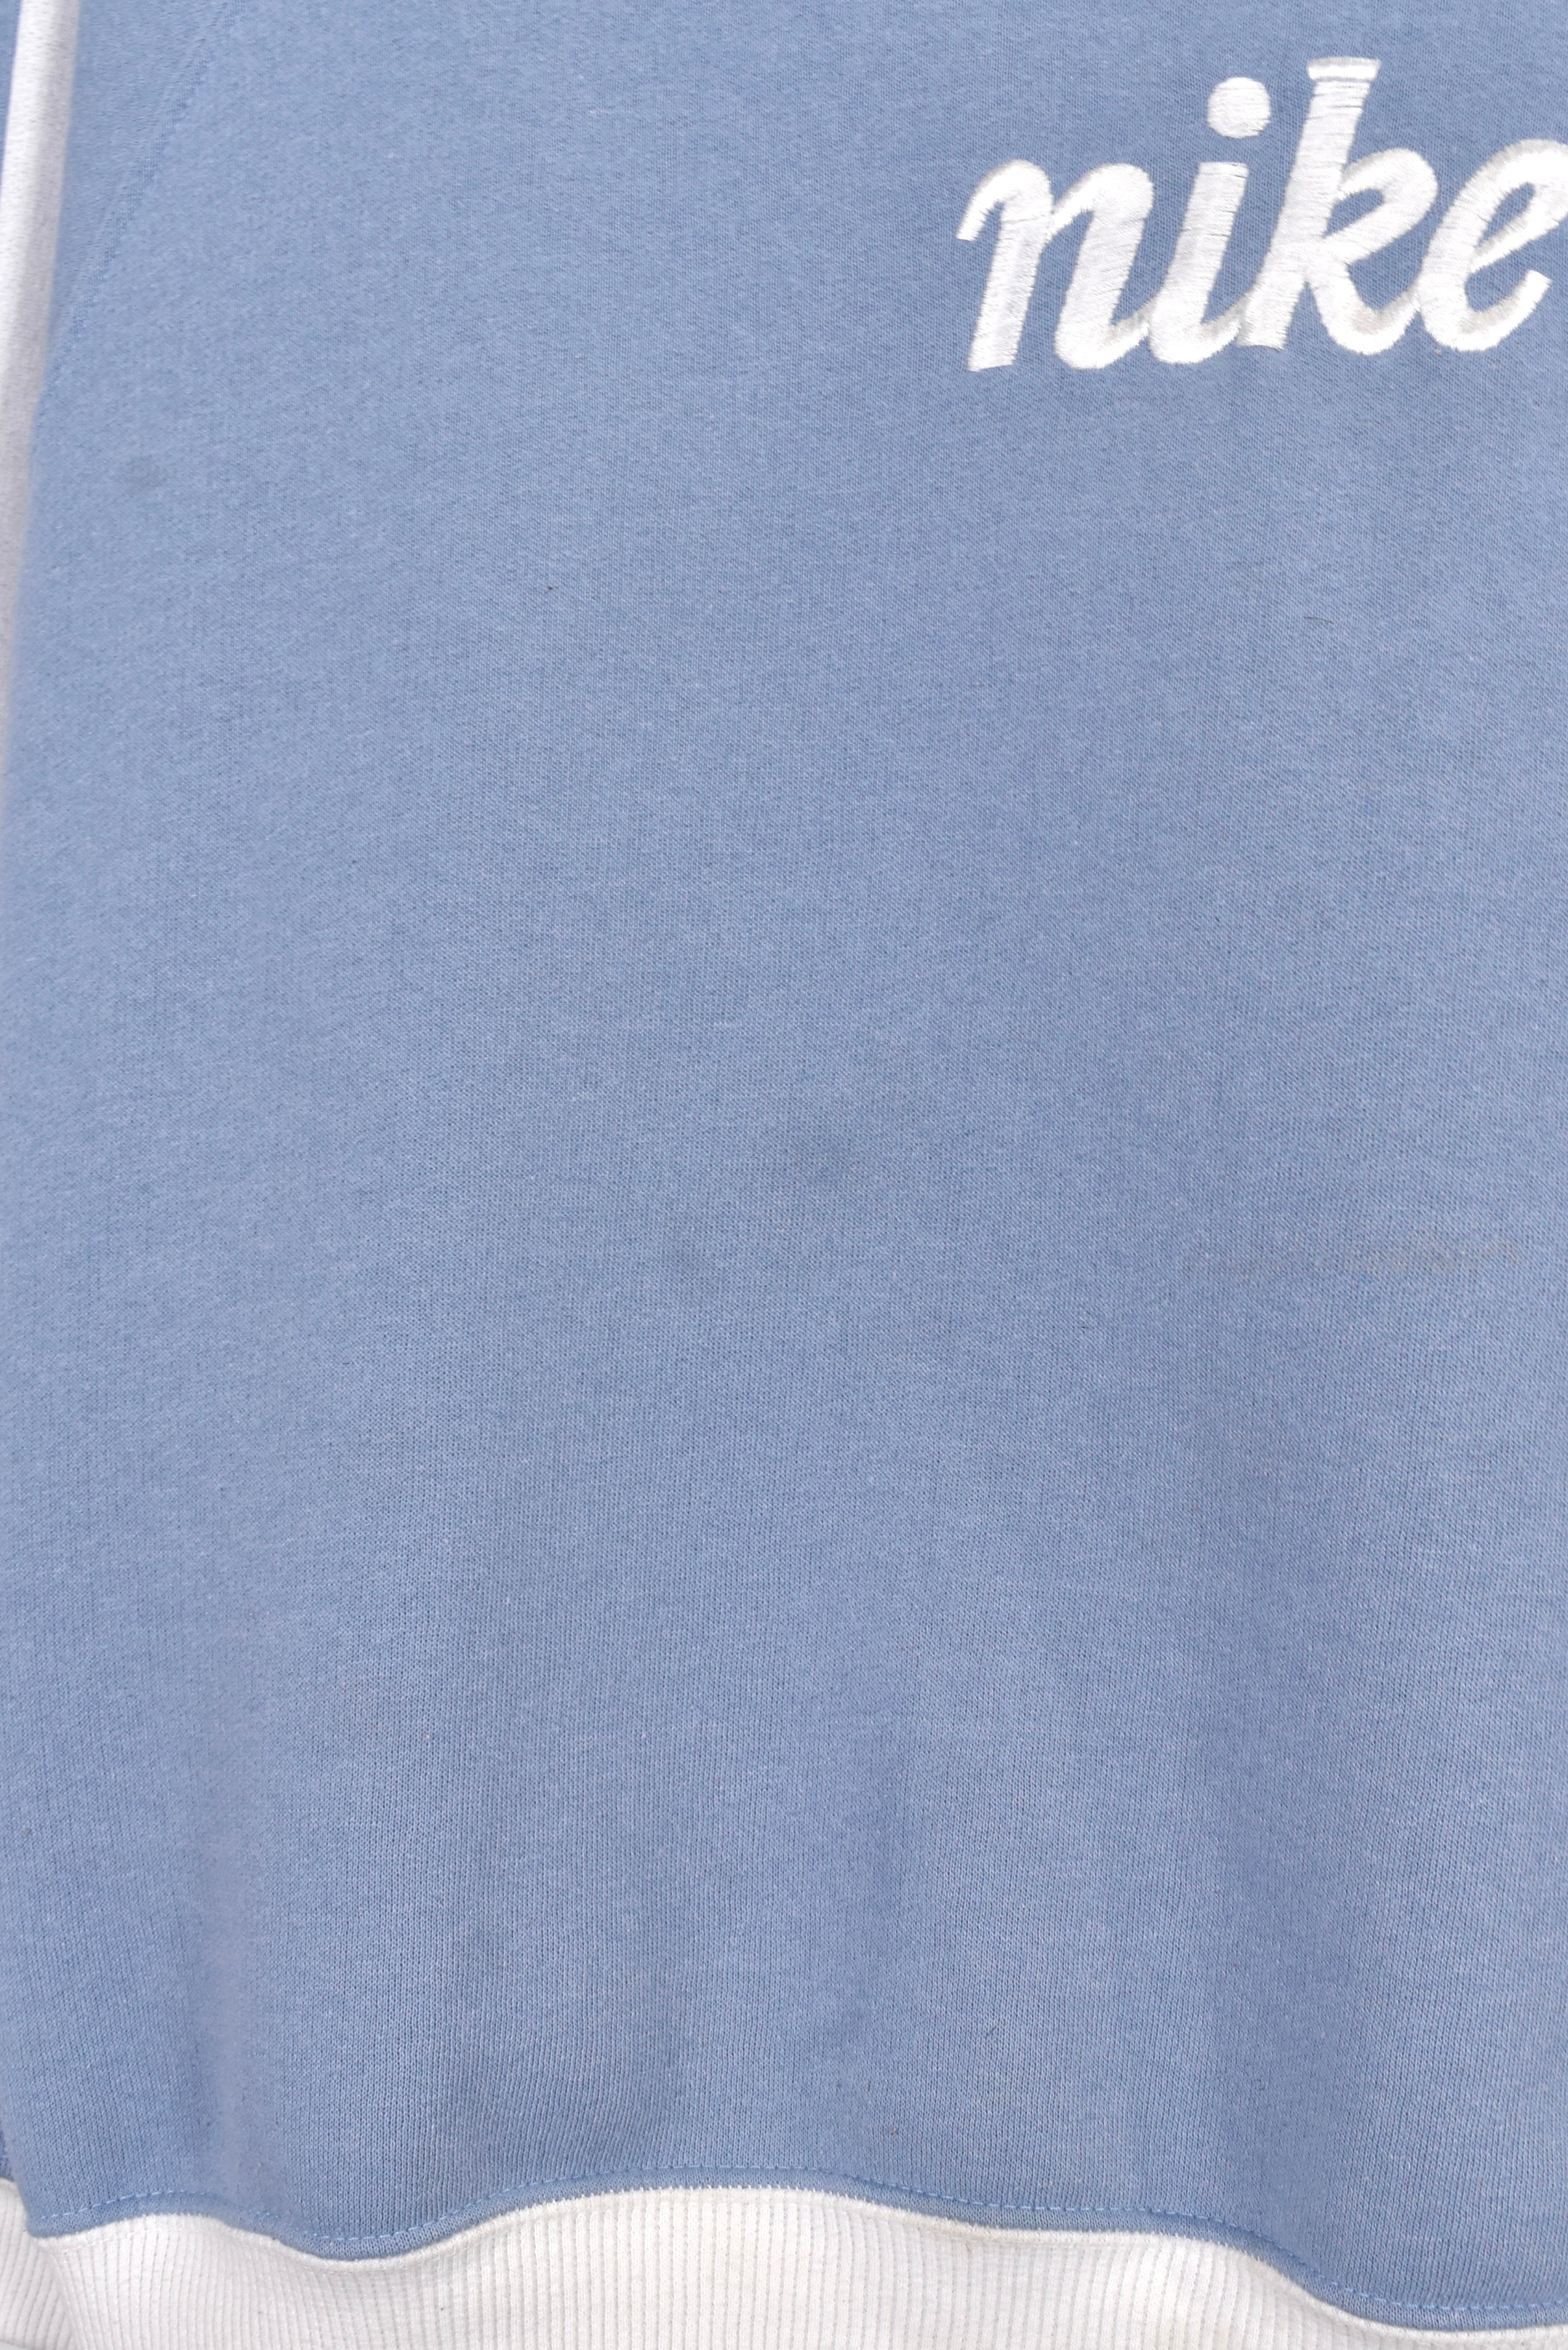 Womens vintage Nike sweatshirt, blue embroidered crewneck - Large